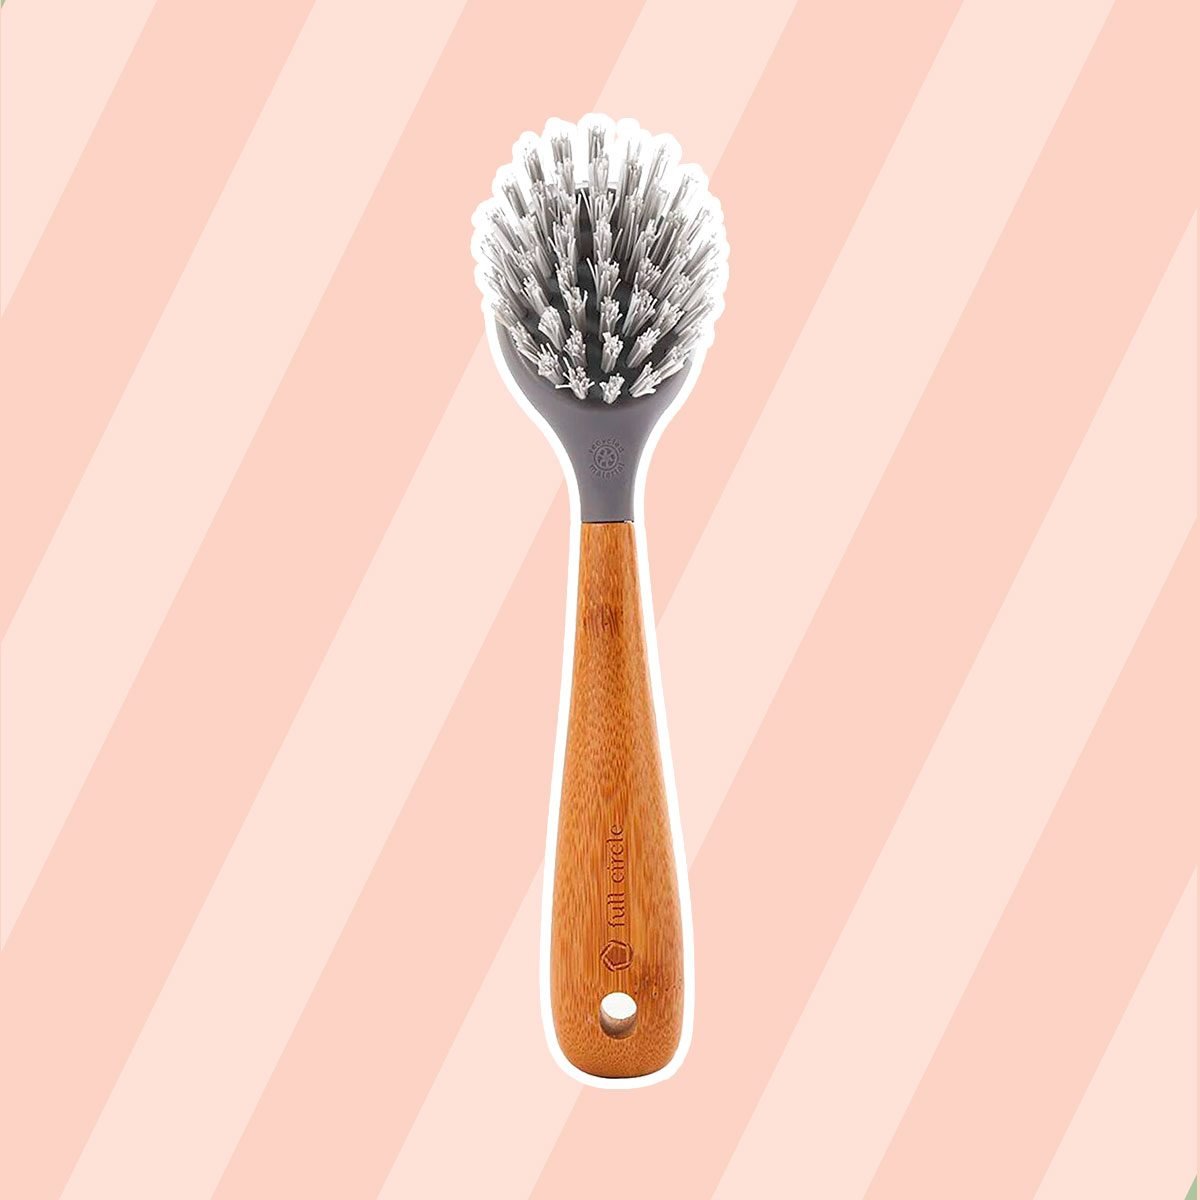 Cast Iron Scrub Brush, Shop Online